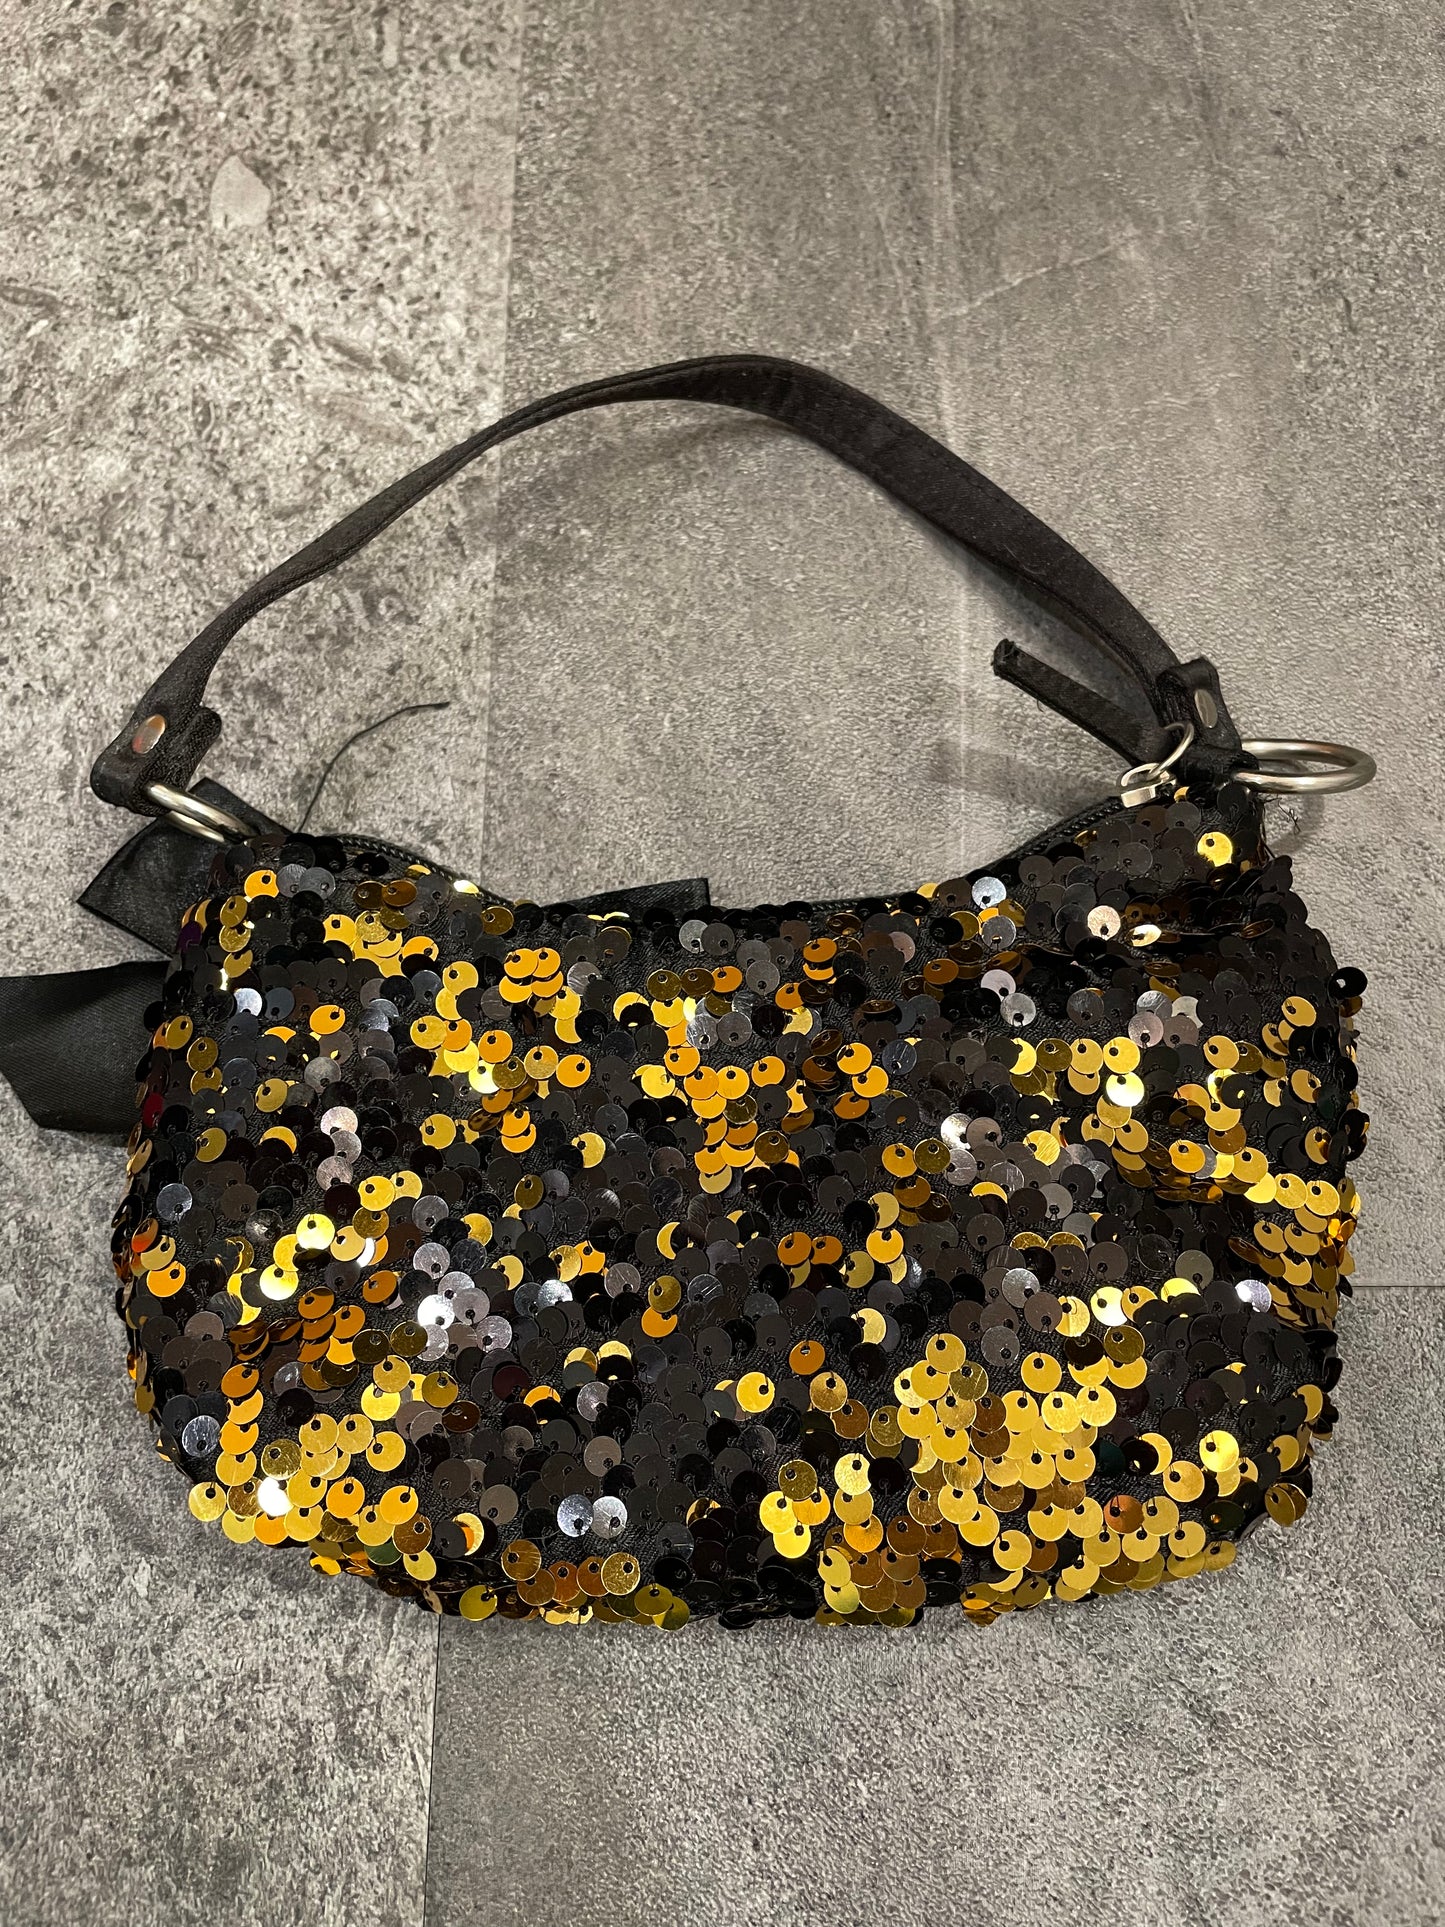 Toby NYC Black & Gold Sequined Handbag